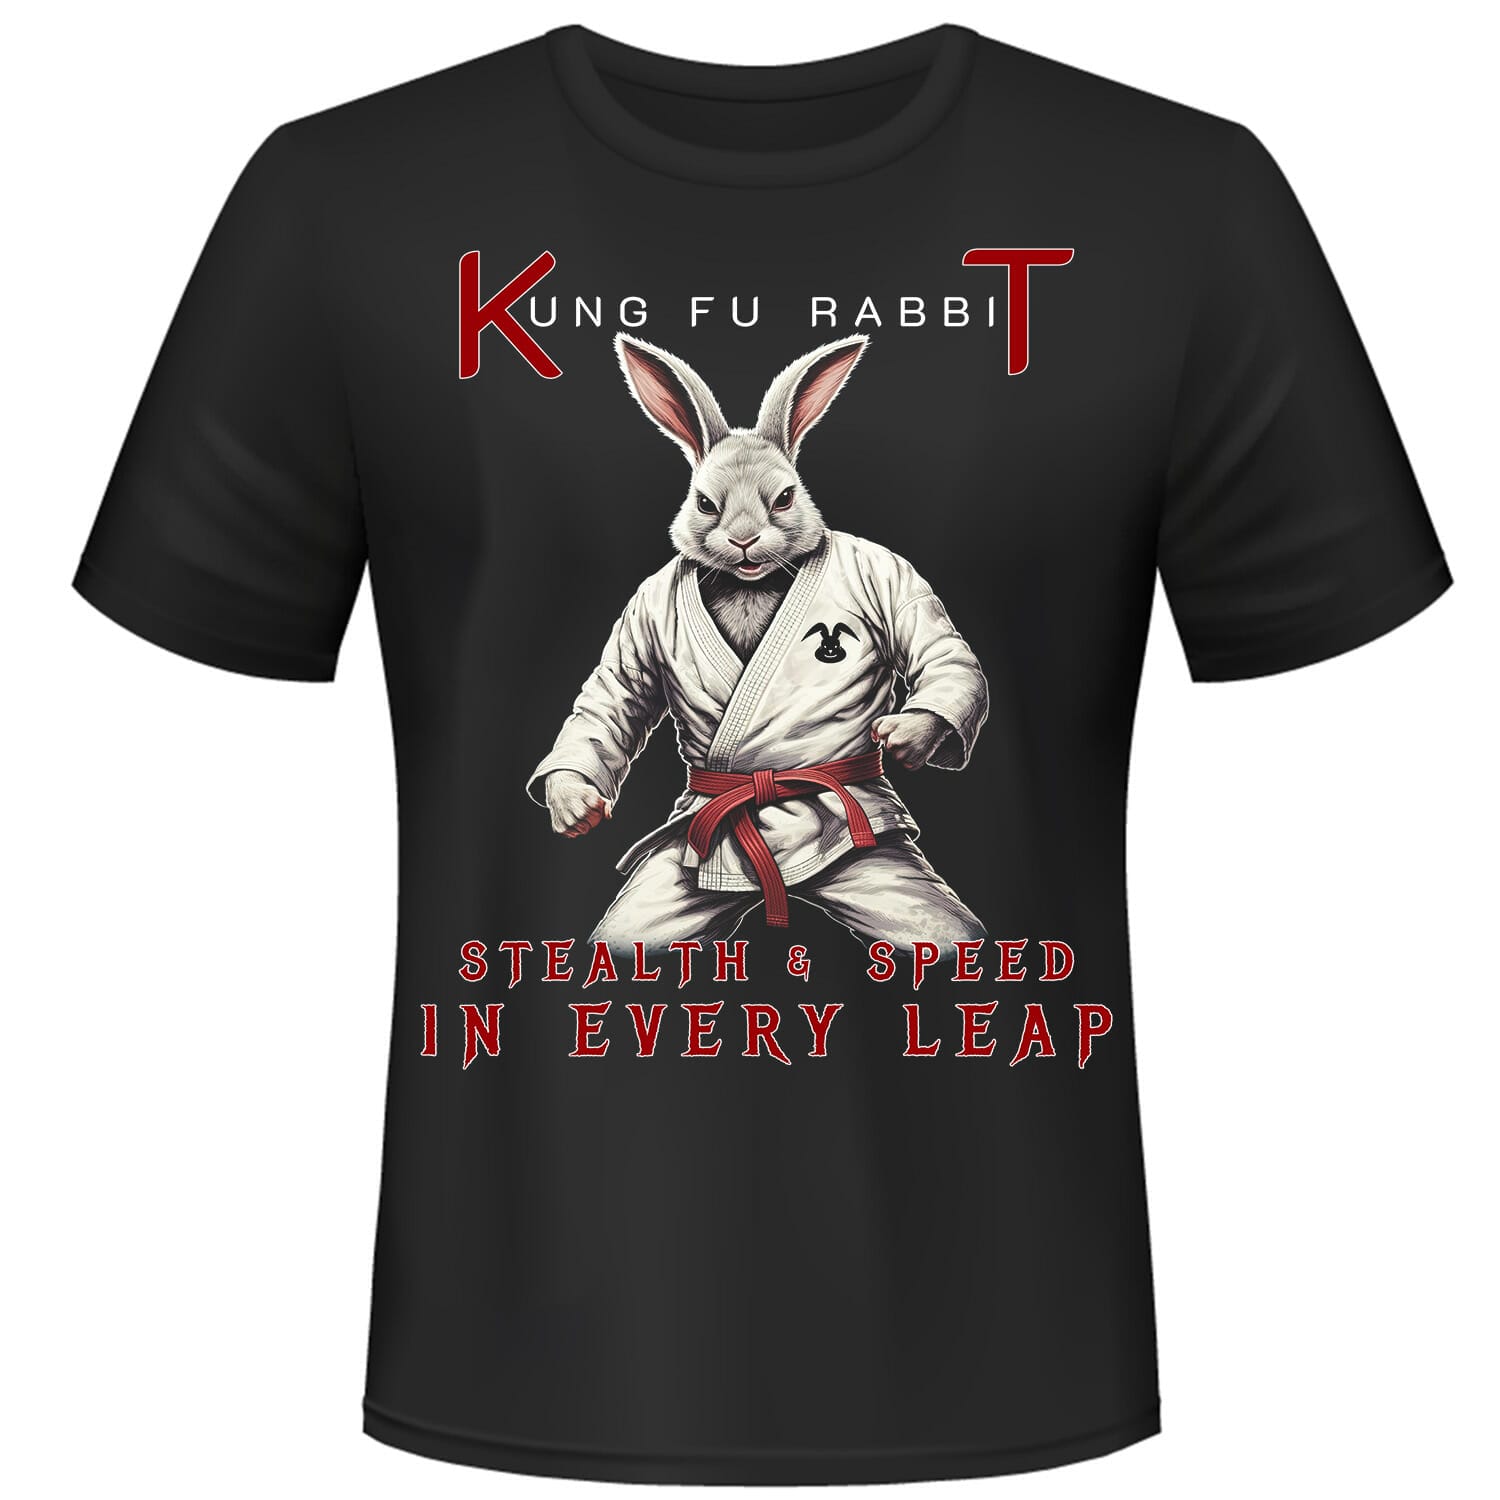 kung fu rabbit t-shirt design